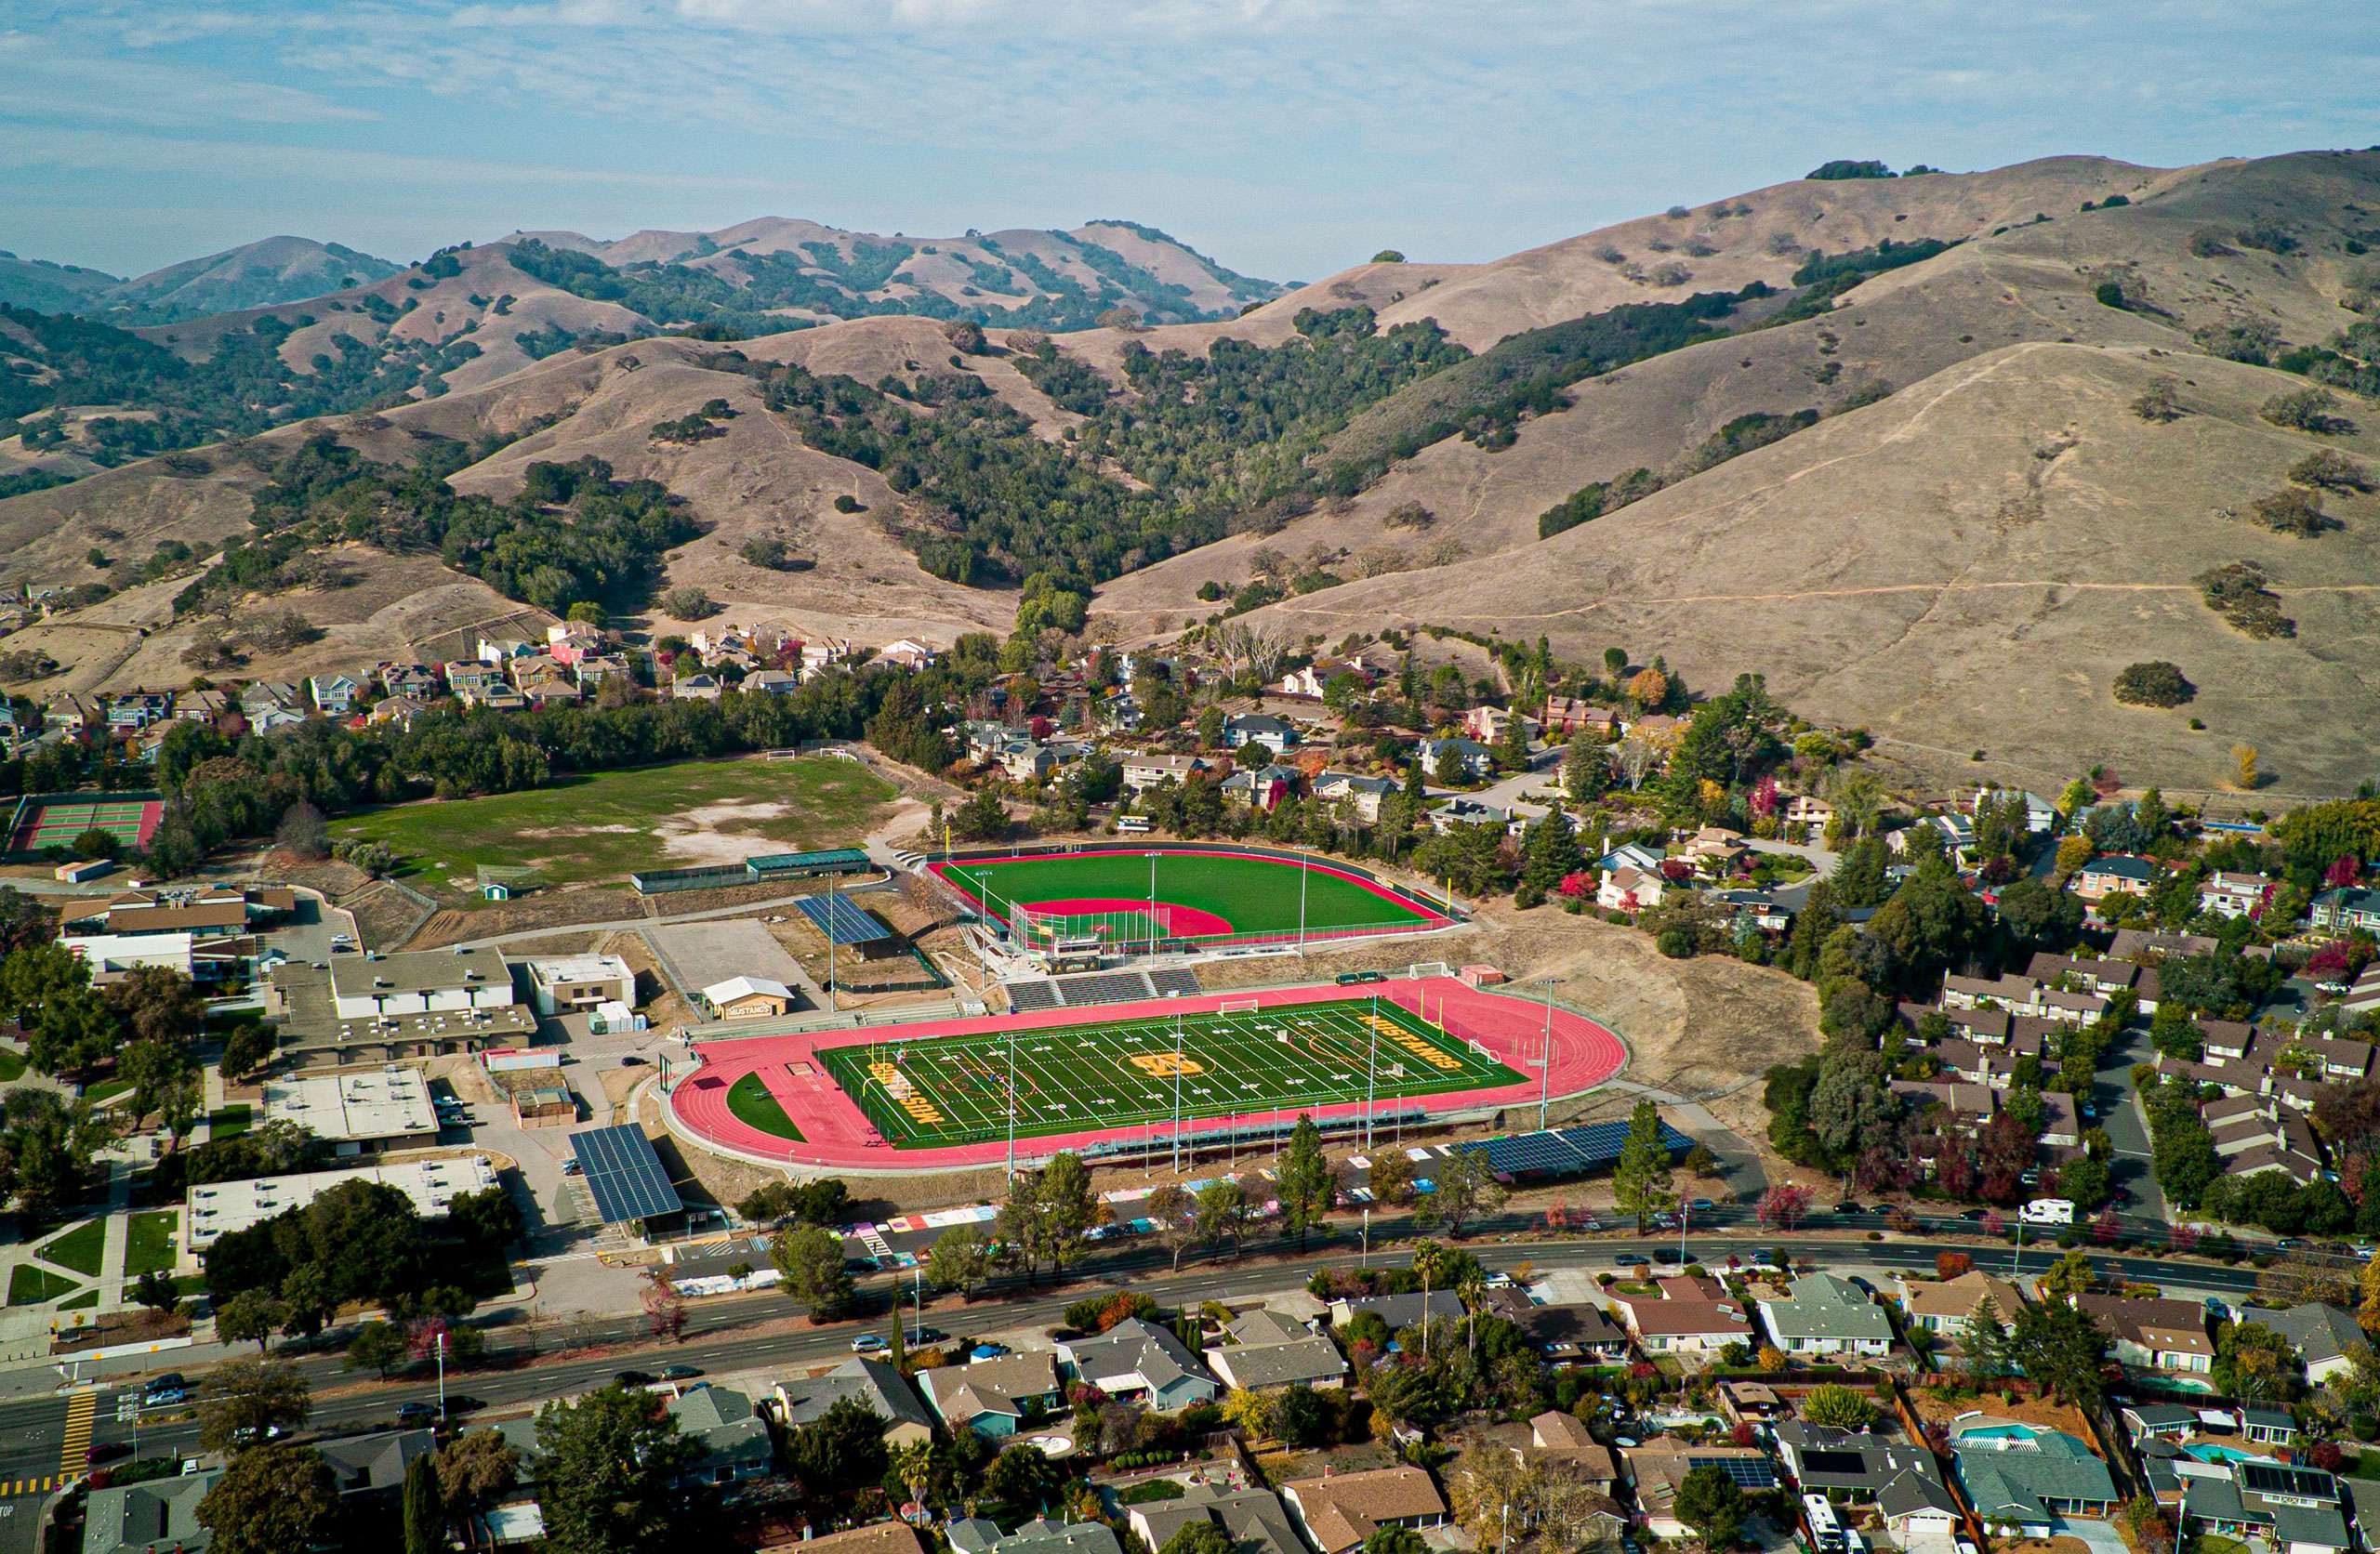 San Marin High School Fields